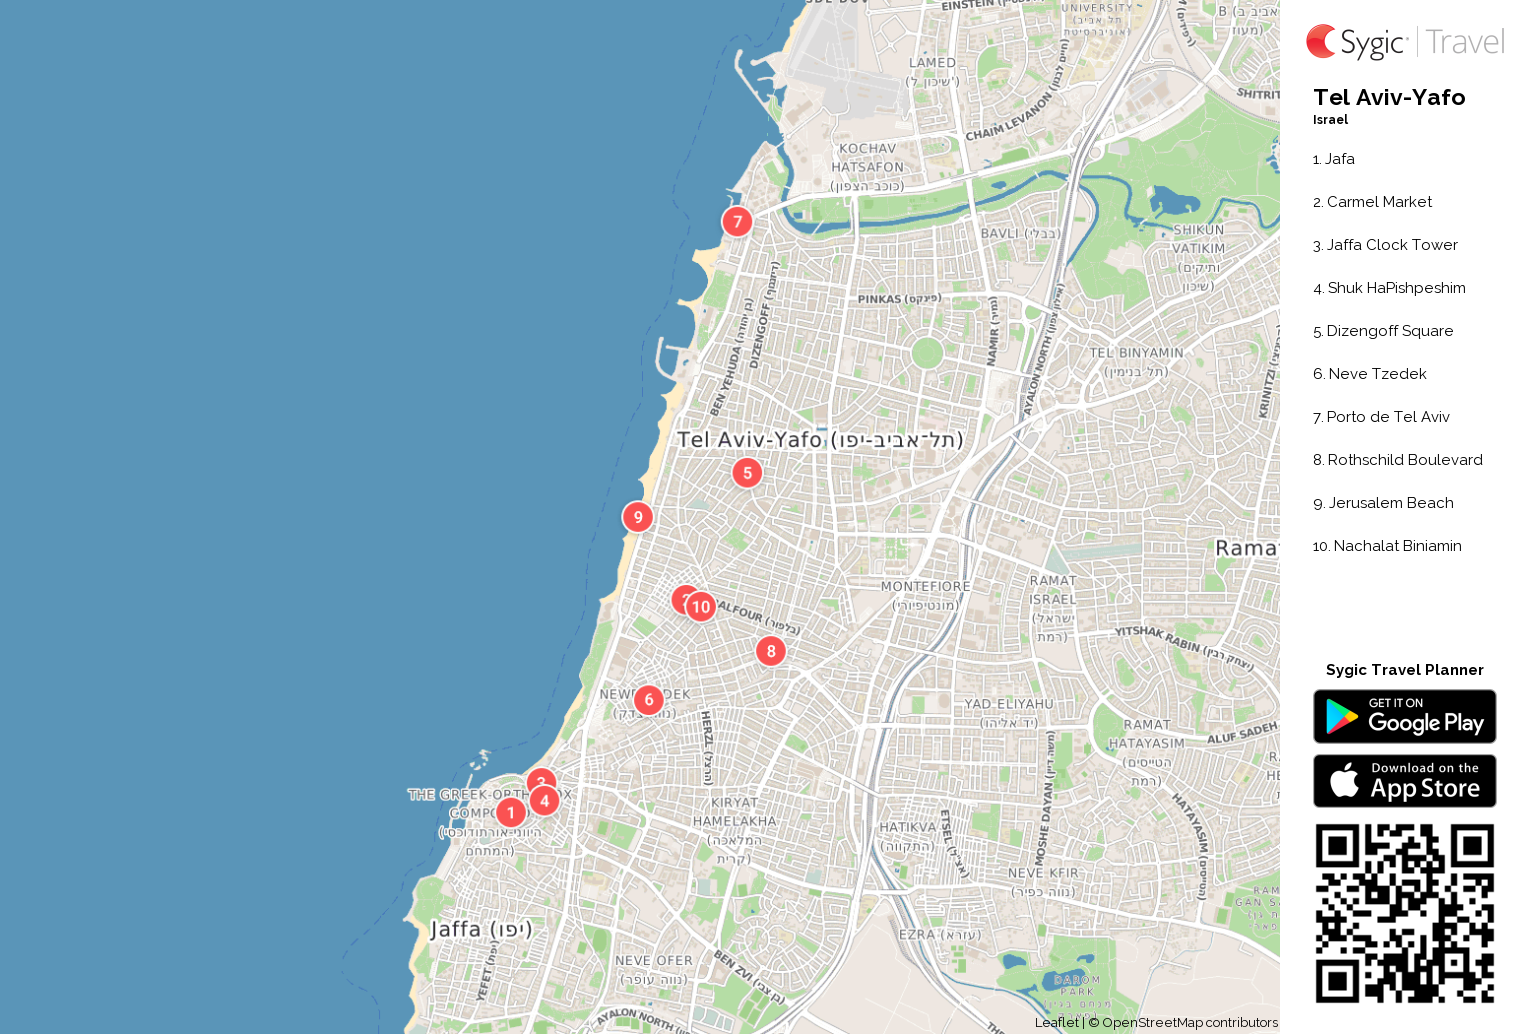 Tel Aviv-Yafo: Mapa turístico em pdf | Sygic Travel